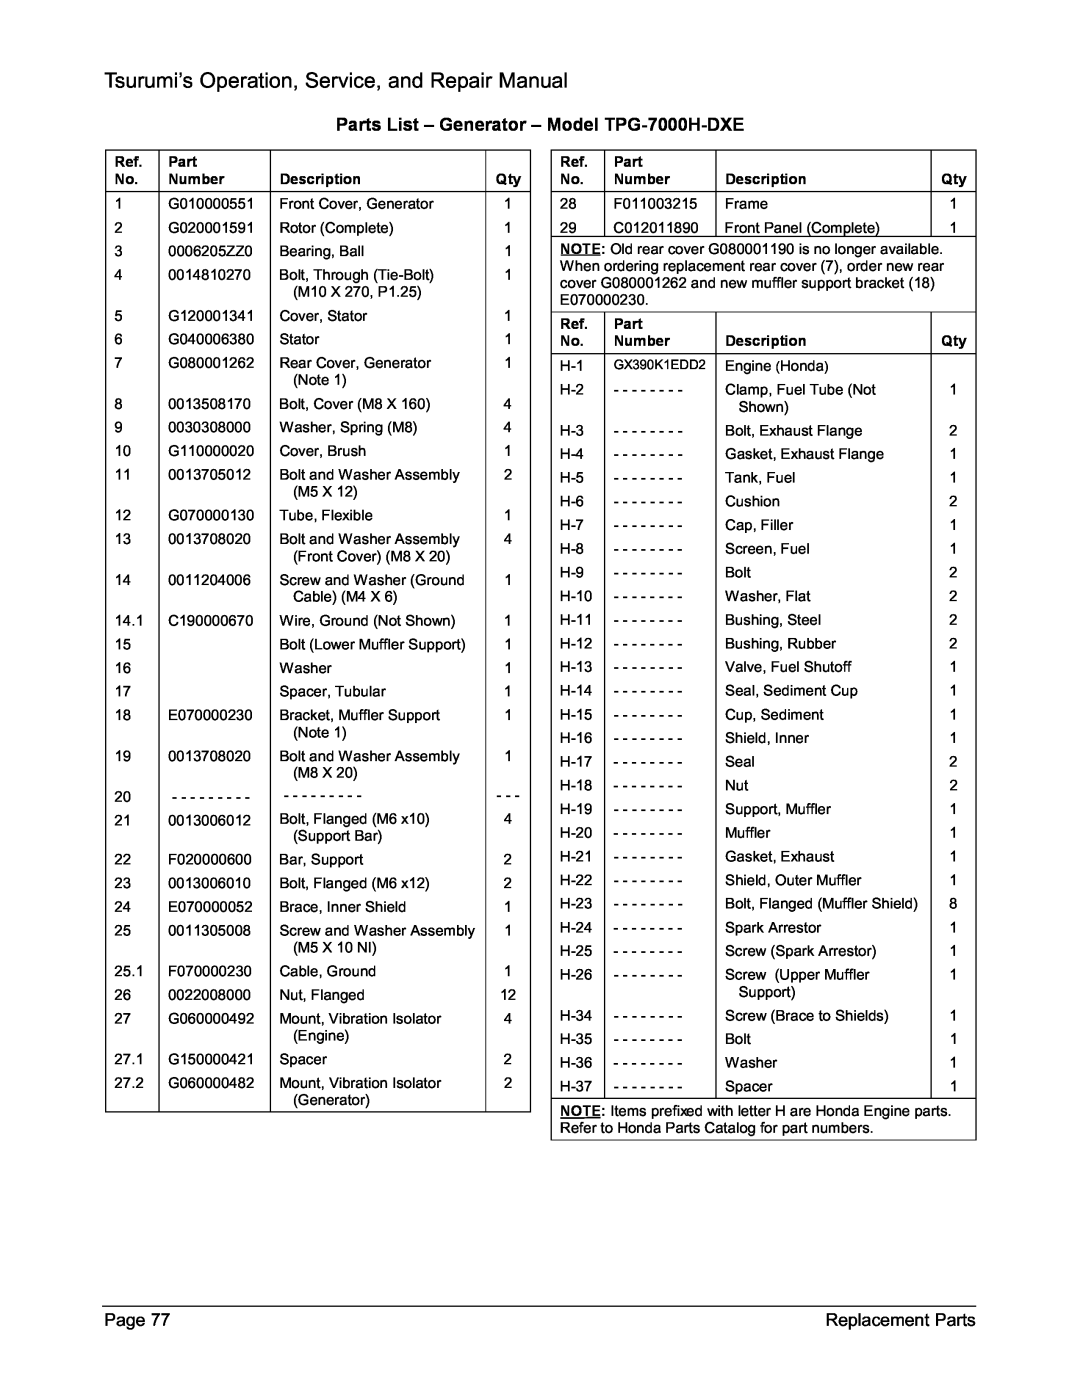 Honda Power Equipment TPG-2900H-DX manual Tsurumi’s Operation, Service, and Repair Manual, Part, Number, Description 